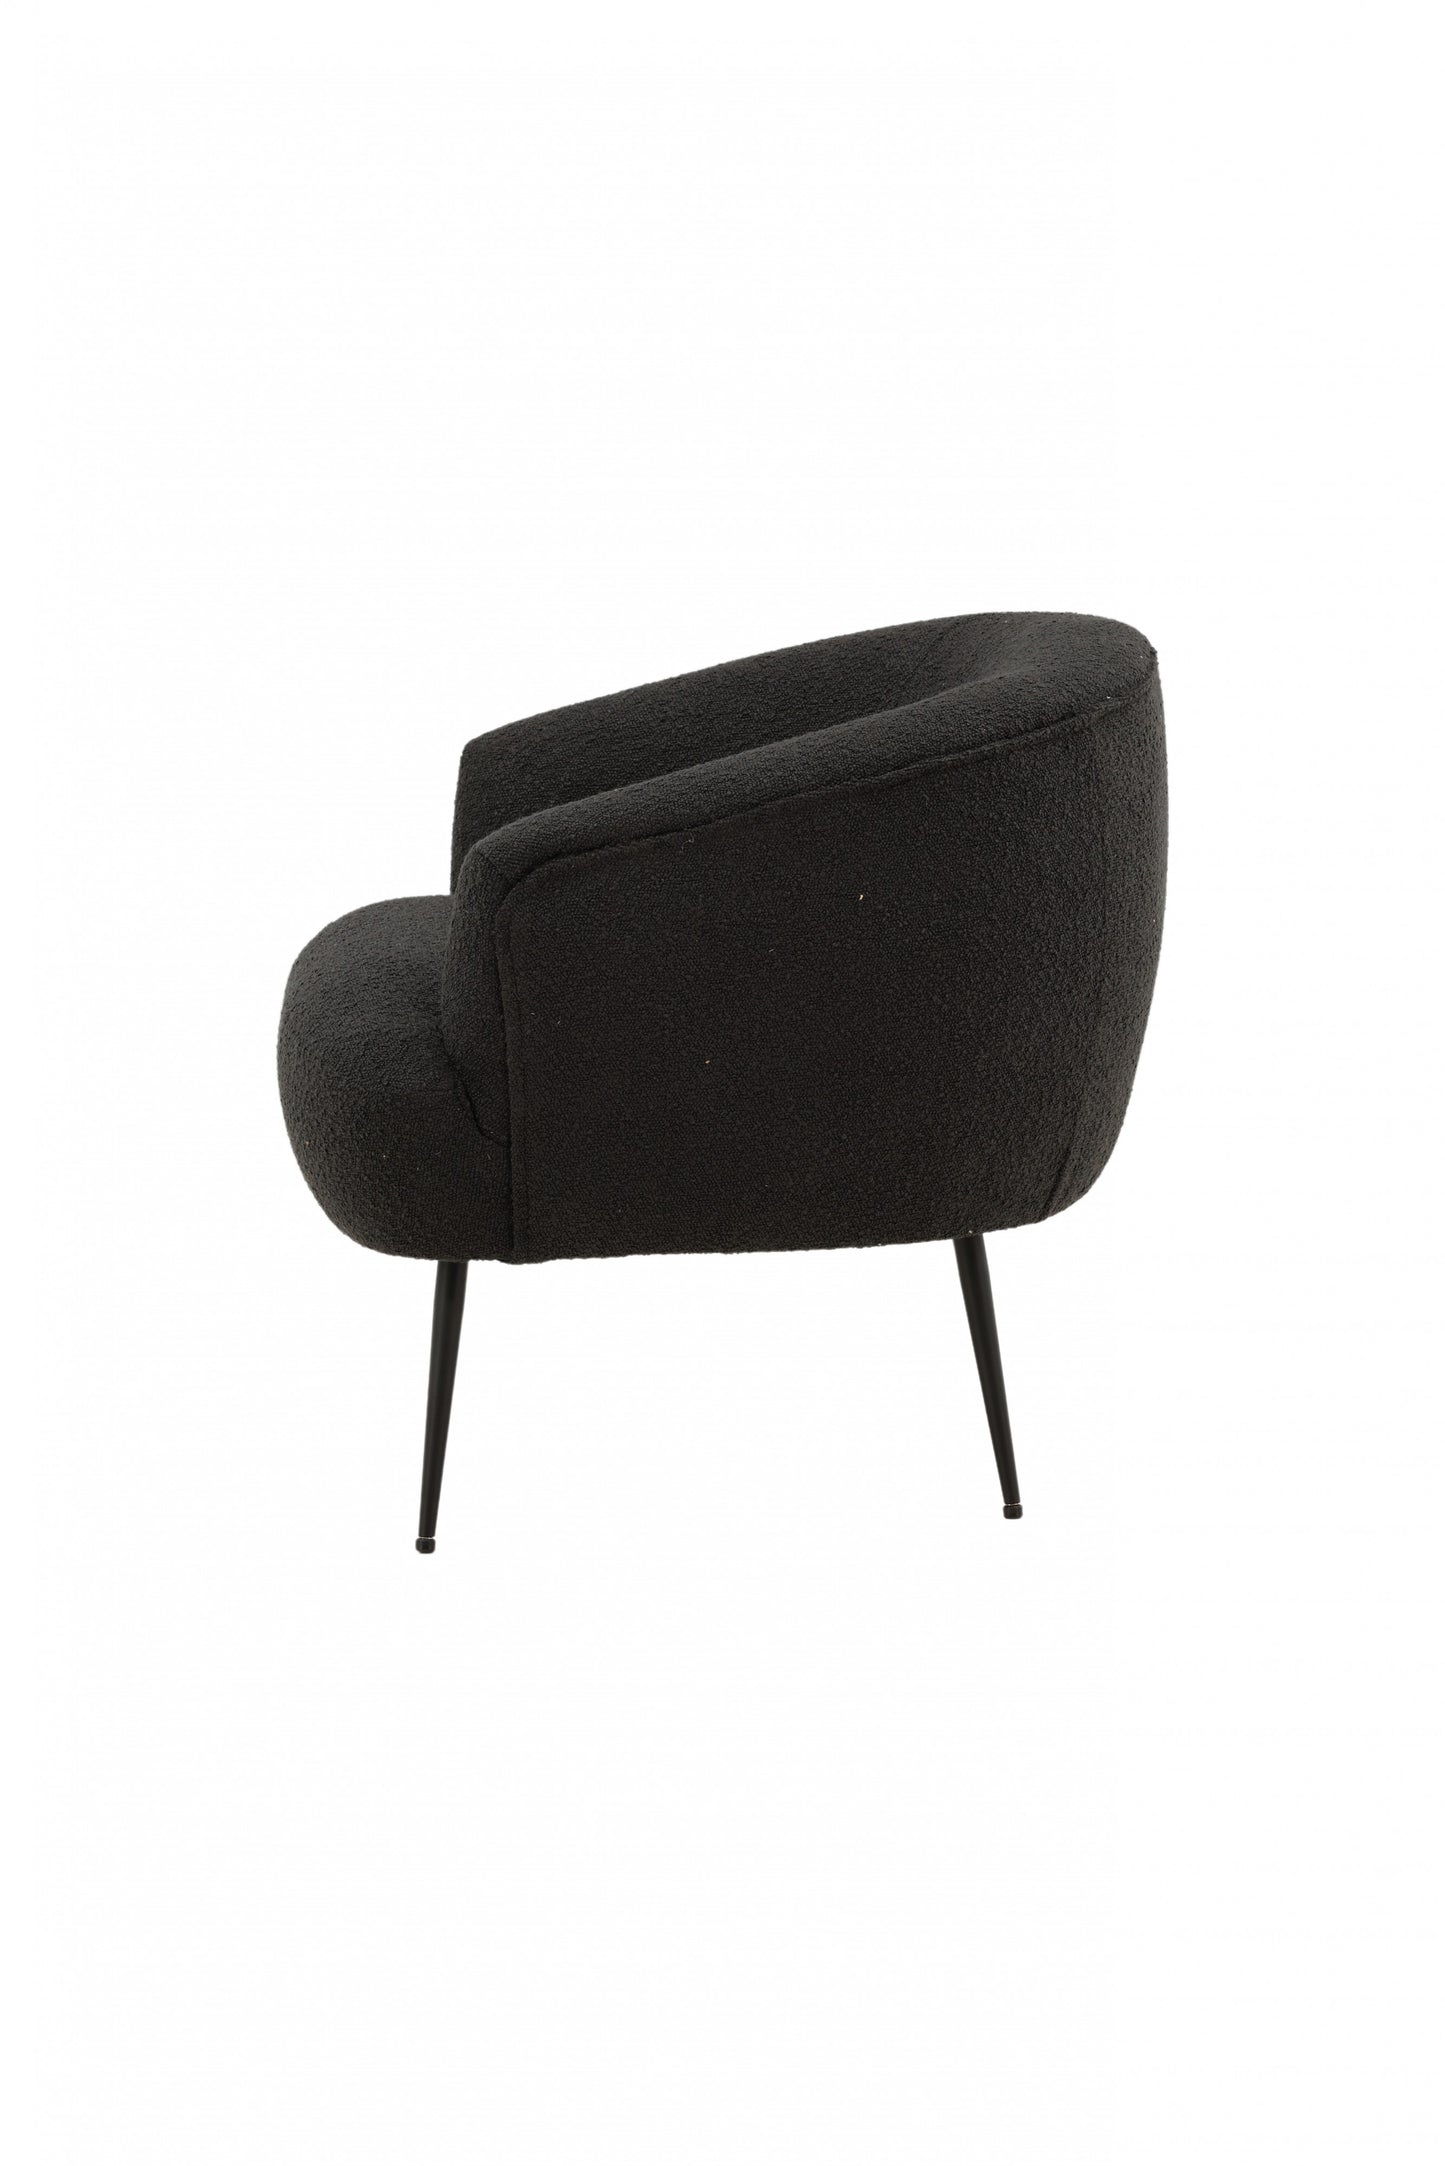 Venture-Design | Derry Lounge Chair - Schwarz / Kaffee/Grau Boucle